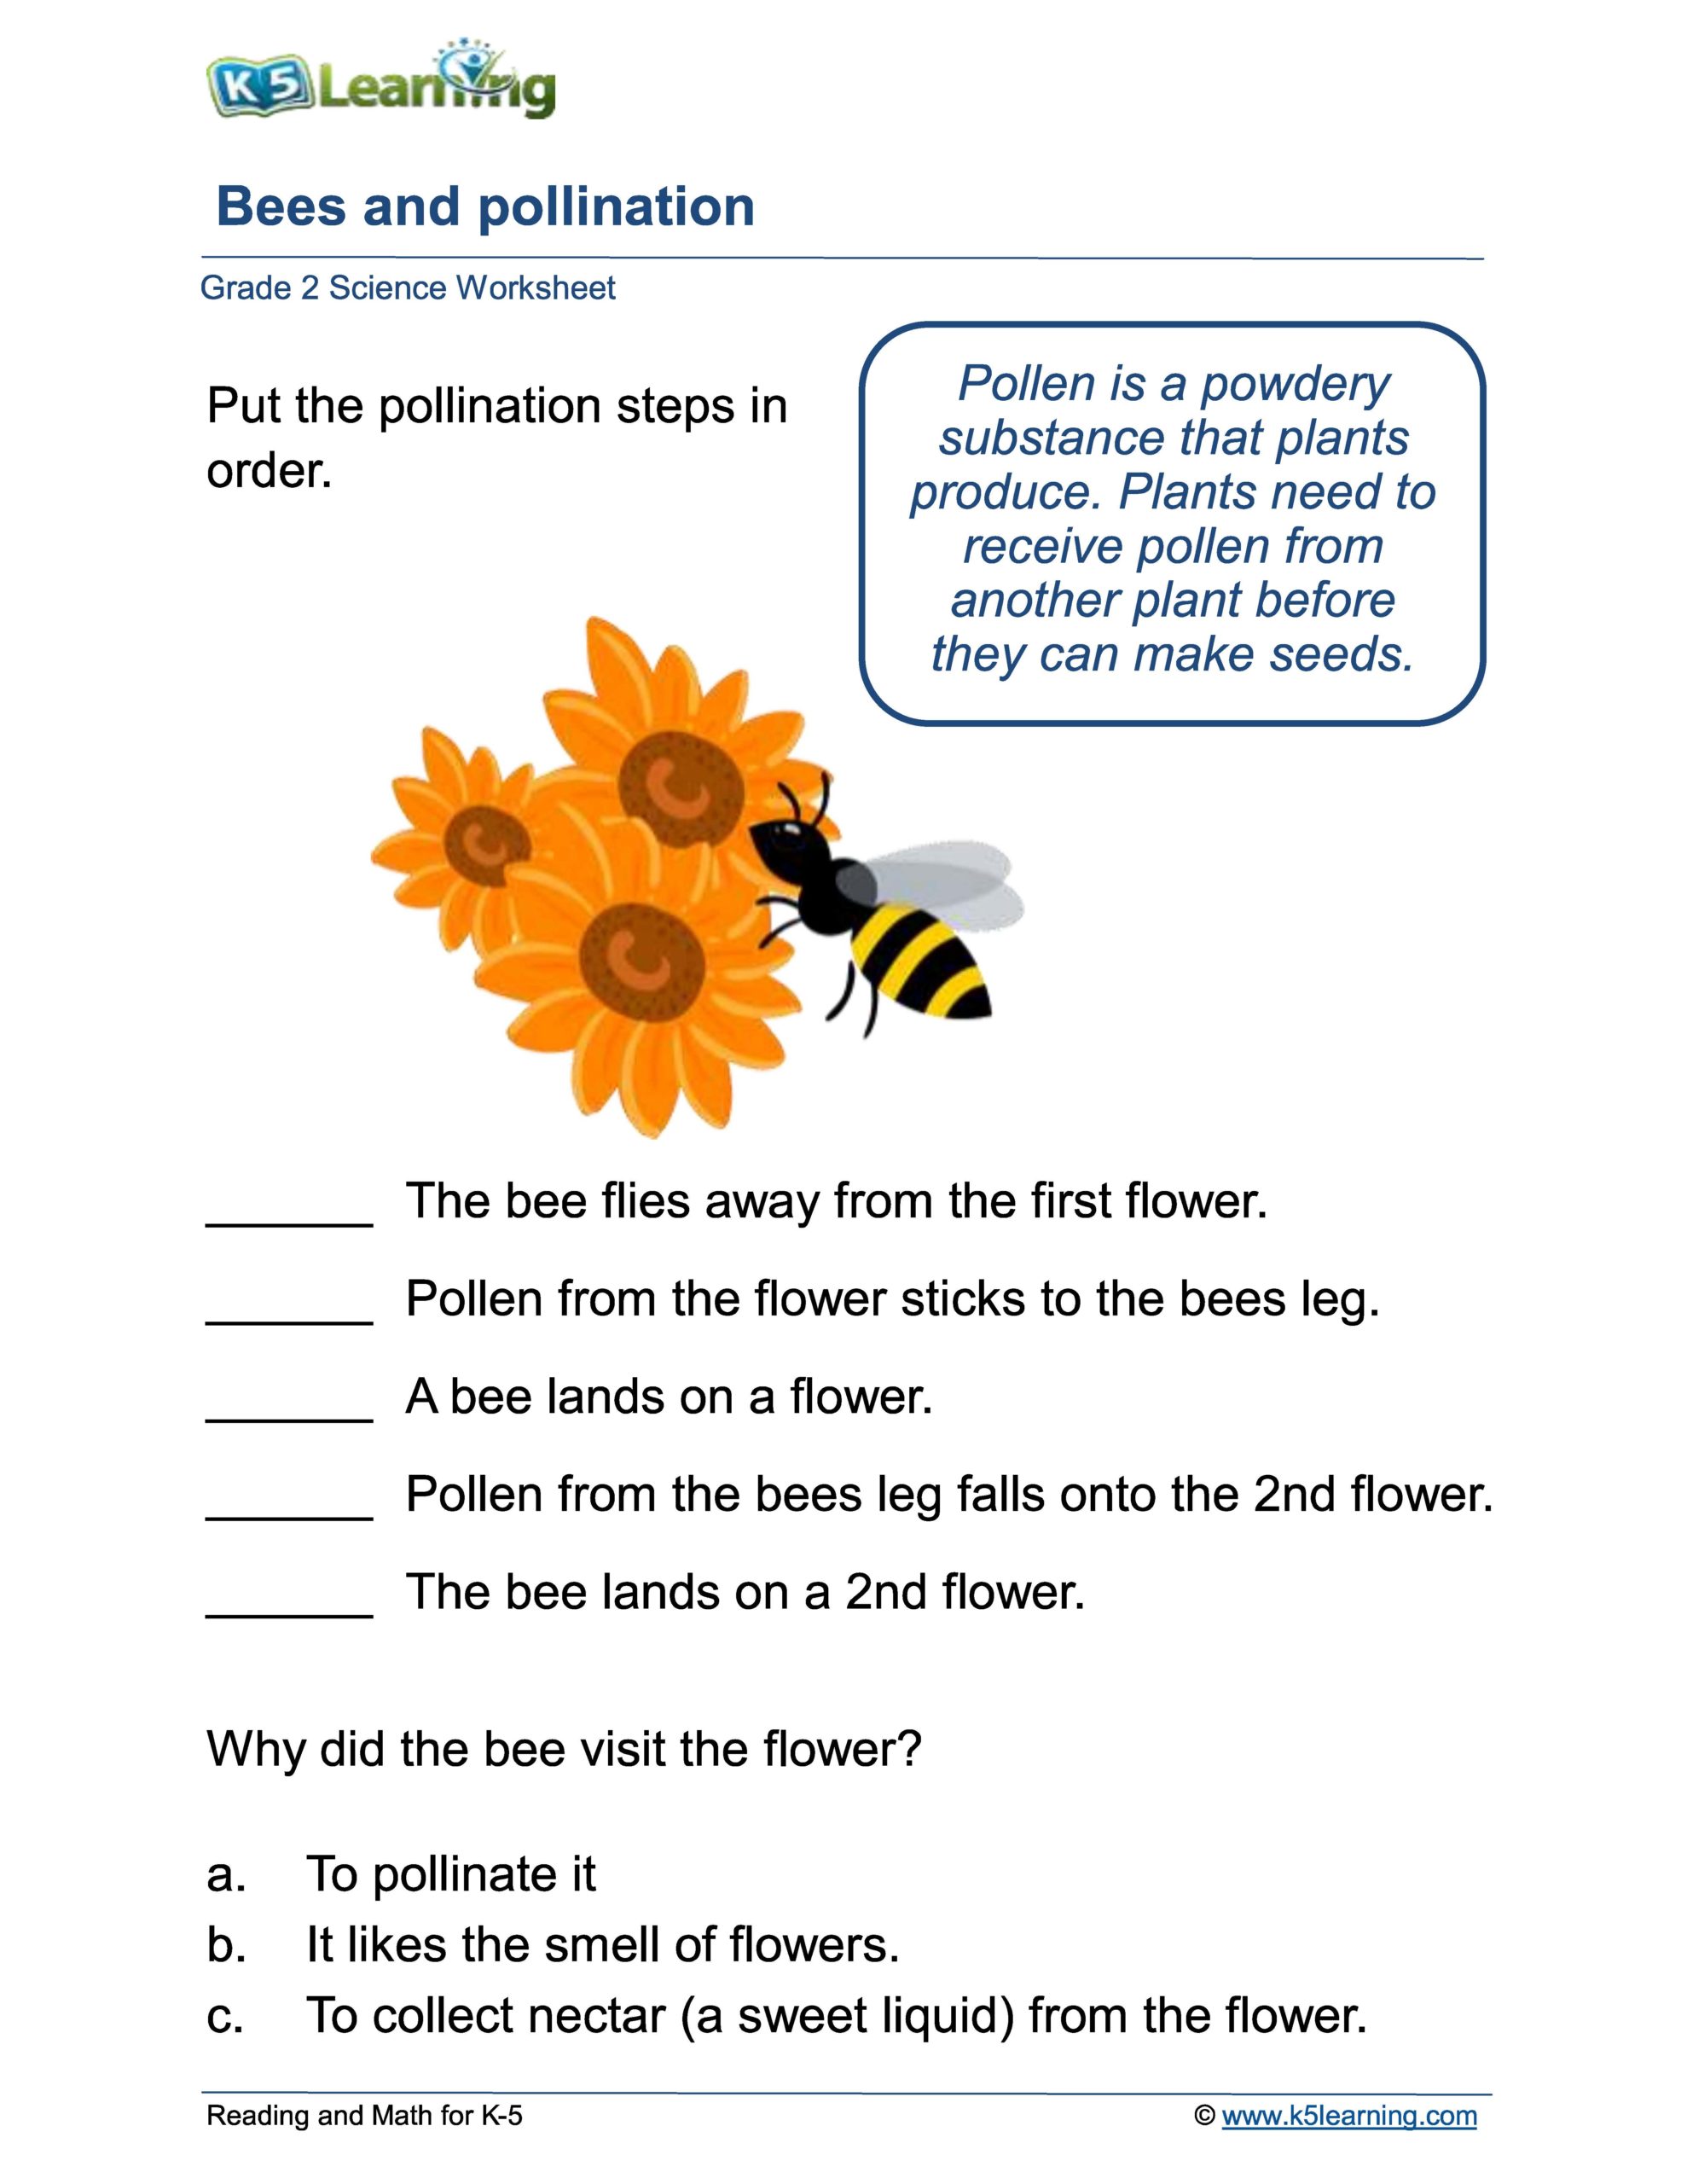 Bees & Pollination worksheet image